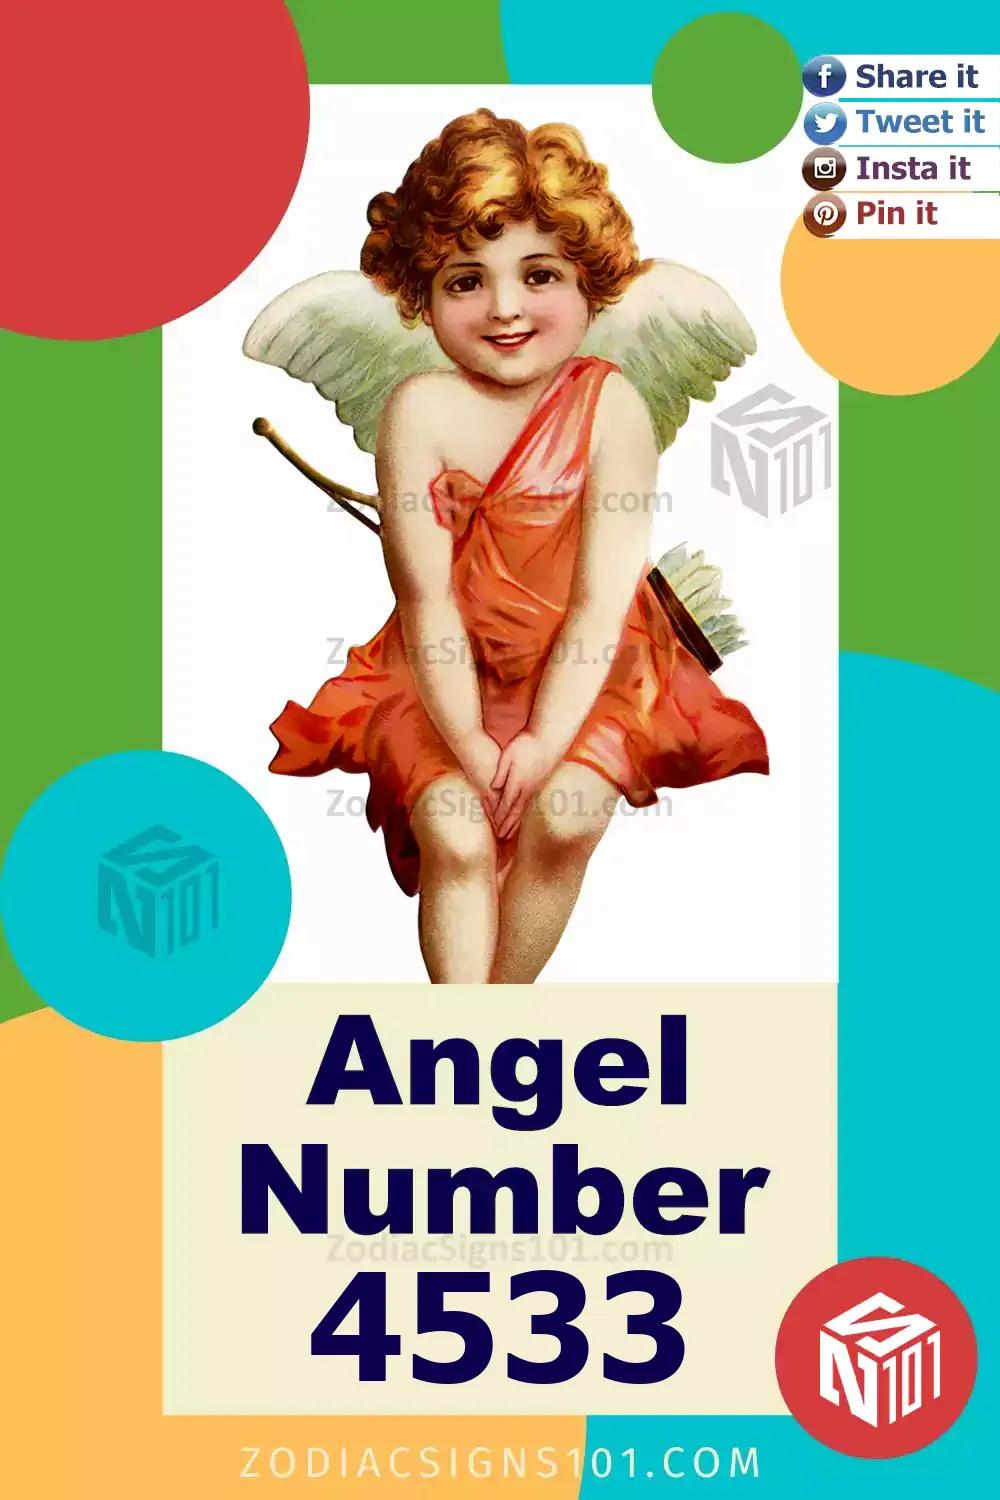 4533-Angel-Number-Meaning.jpg